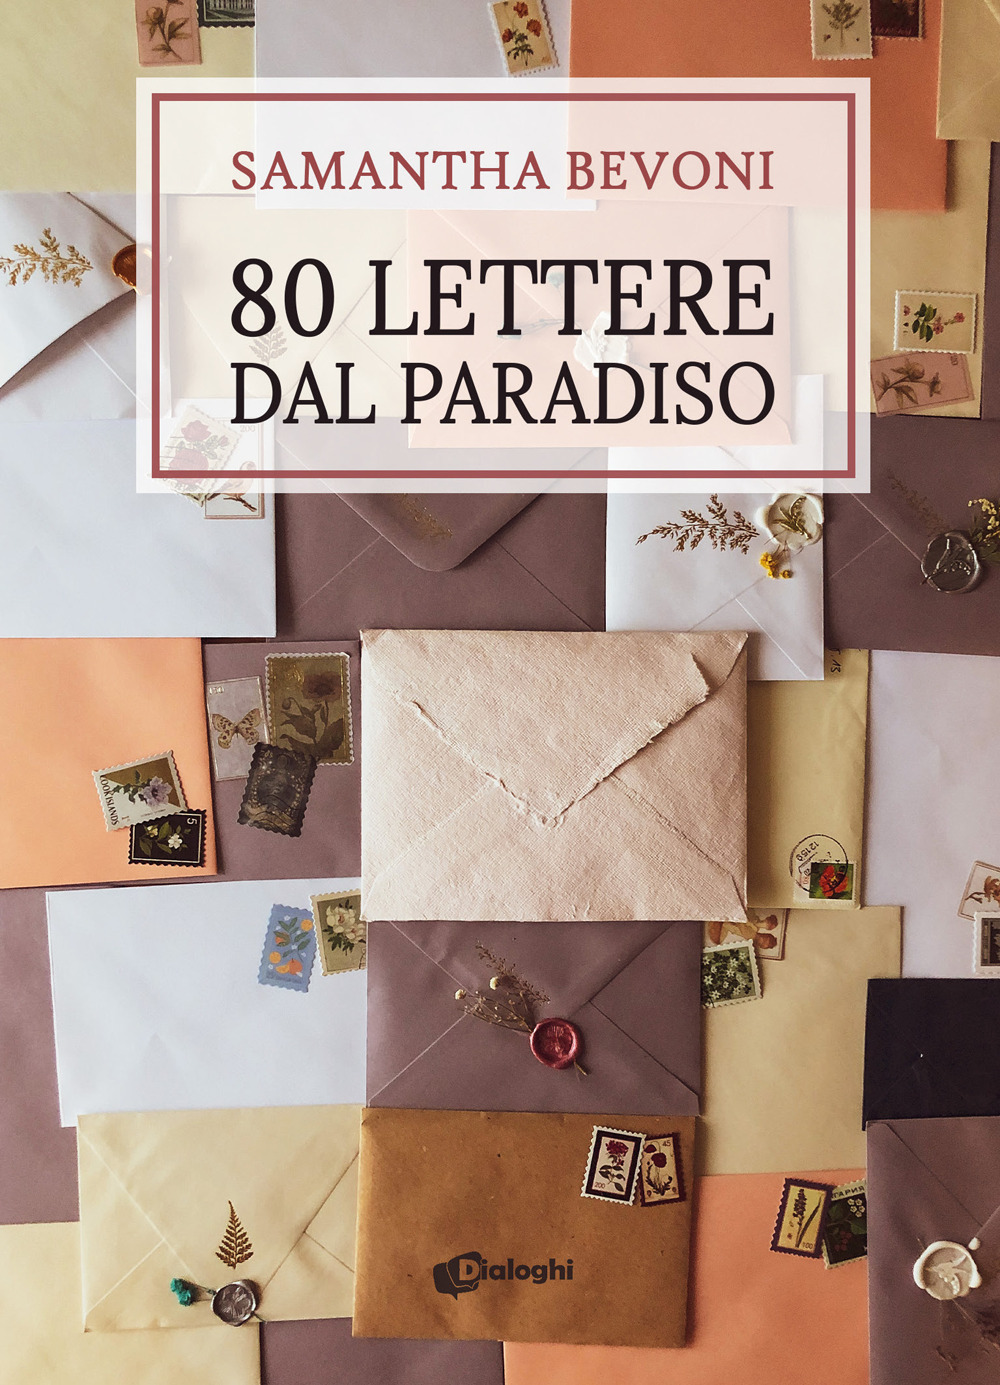 80 lettere dal paradiso